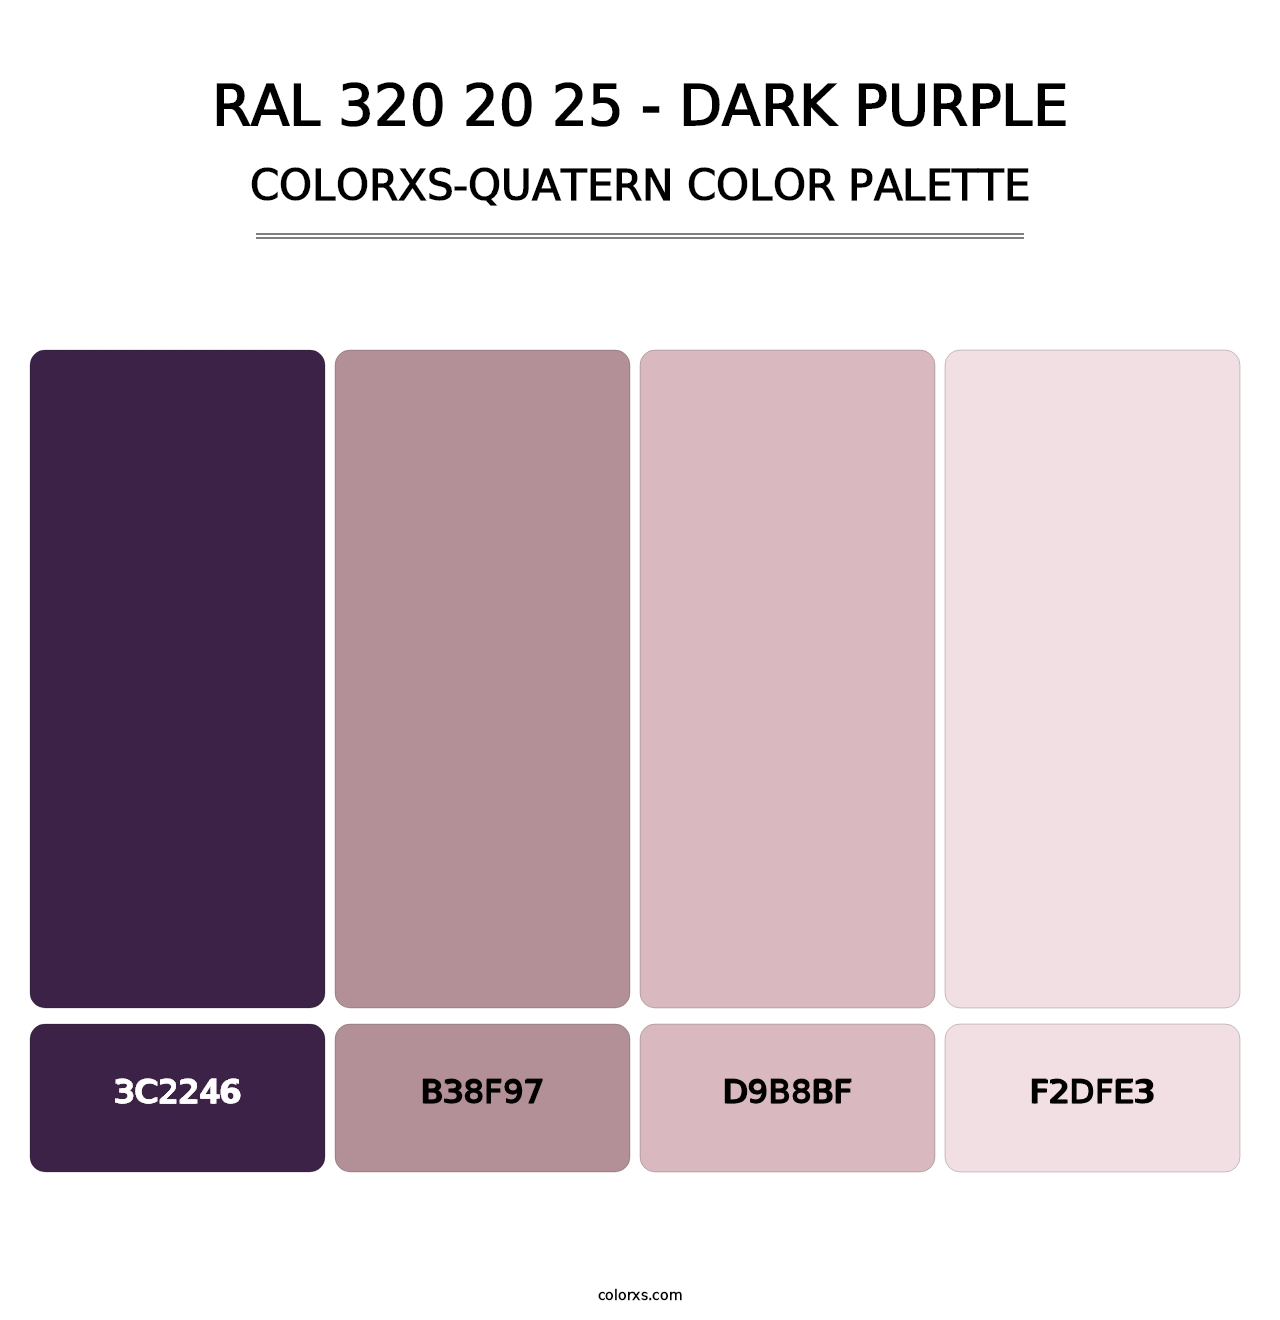 RAL 320 20 25 - Dark Purple - Colorxs Quatern Palette